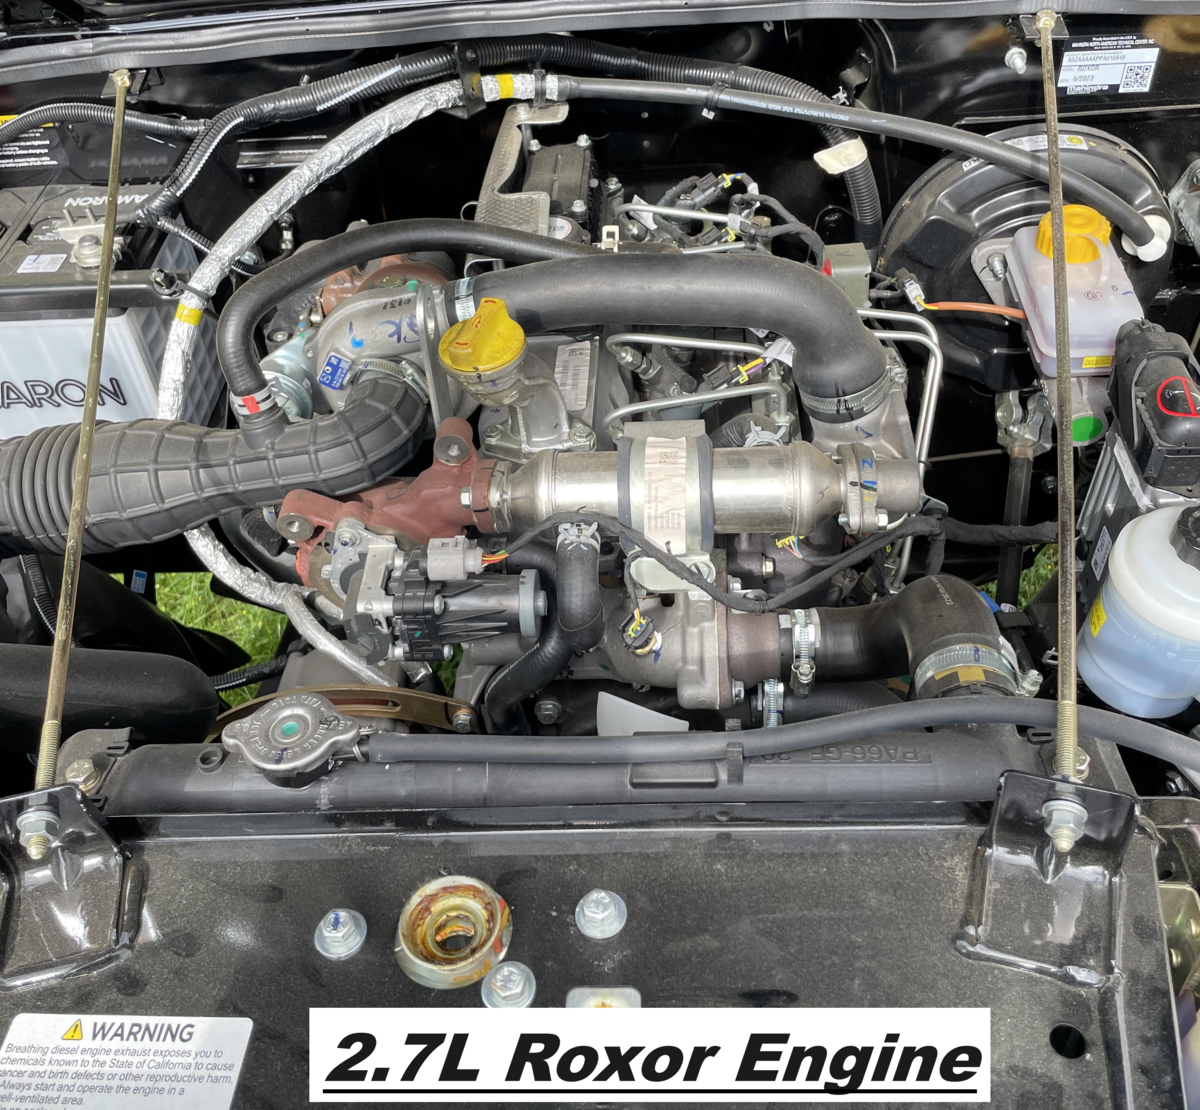 2.7L Roxor Engine.png